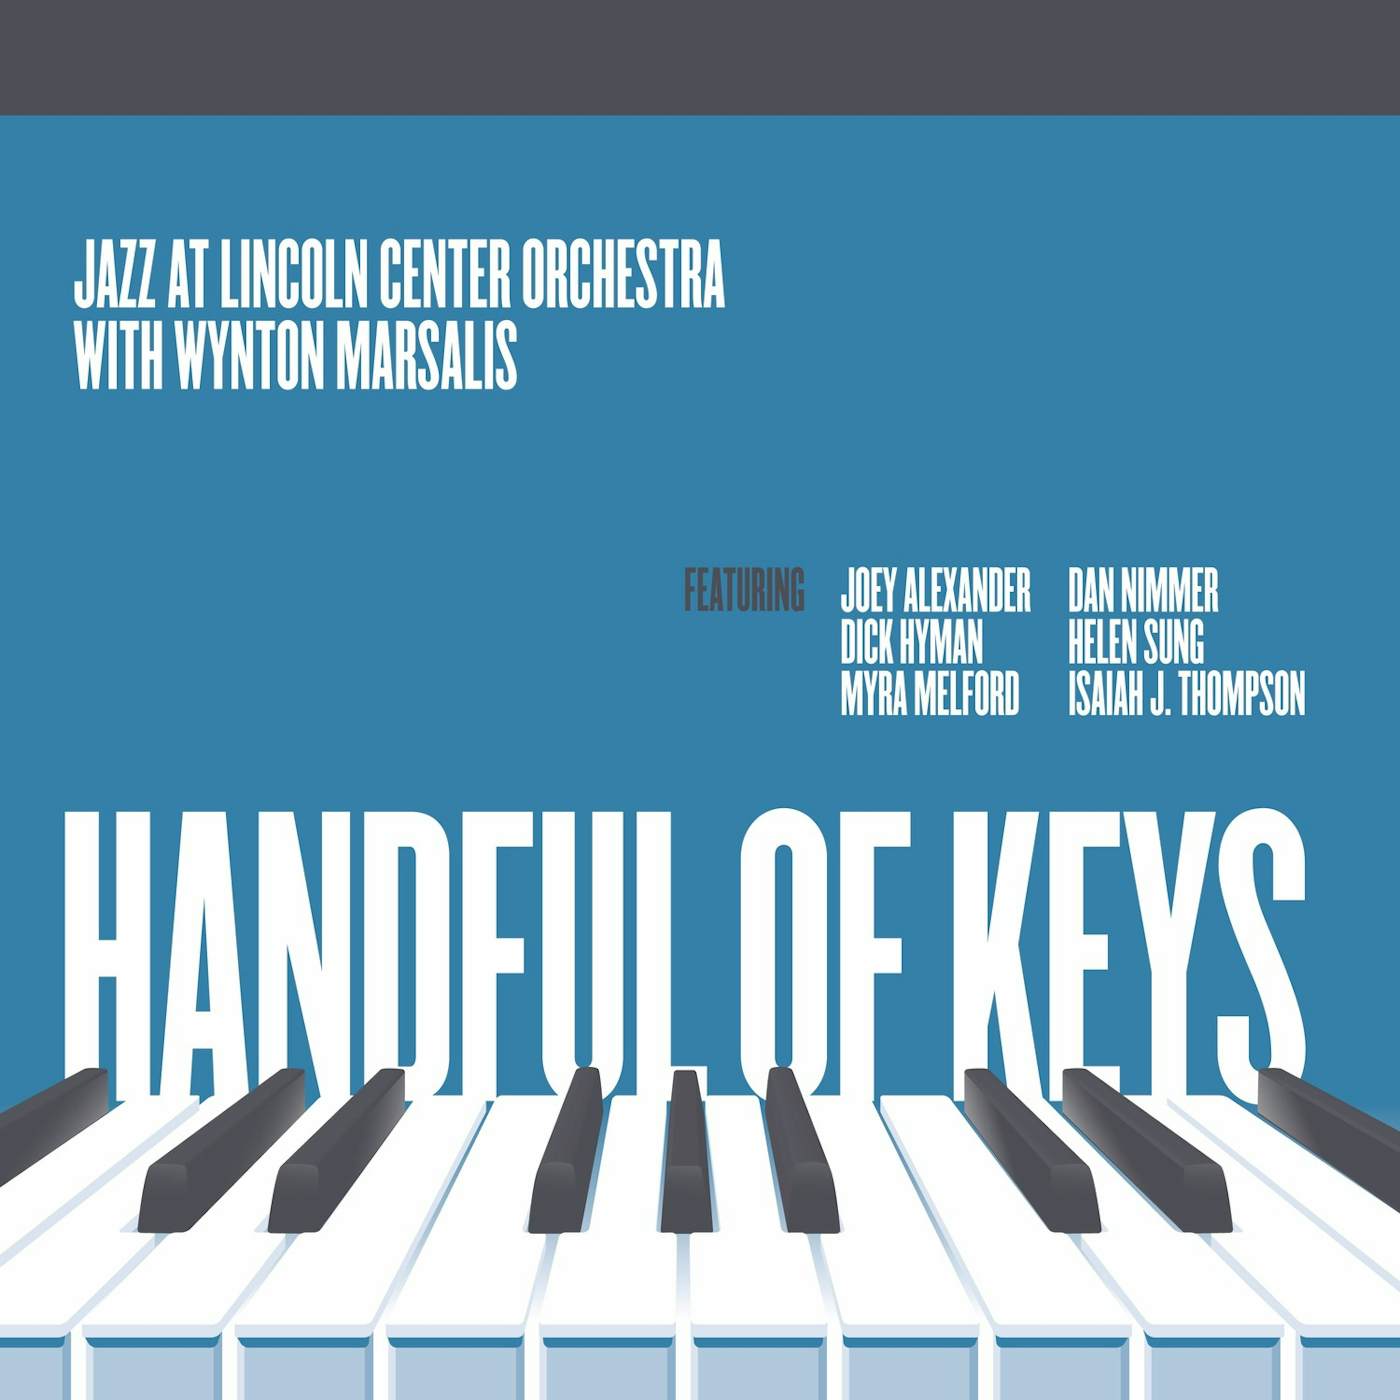 Jazz At Lincoln Center Orchestra / Wynton Marsalis HANDFUL OF KEYS CD